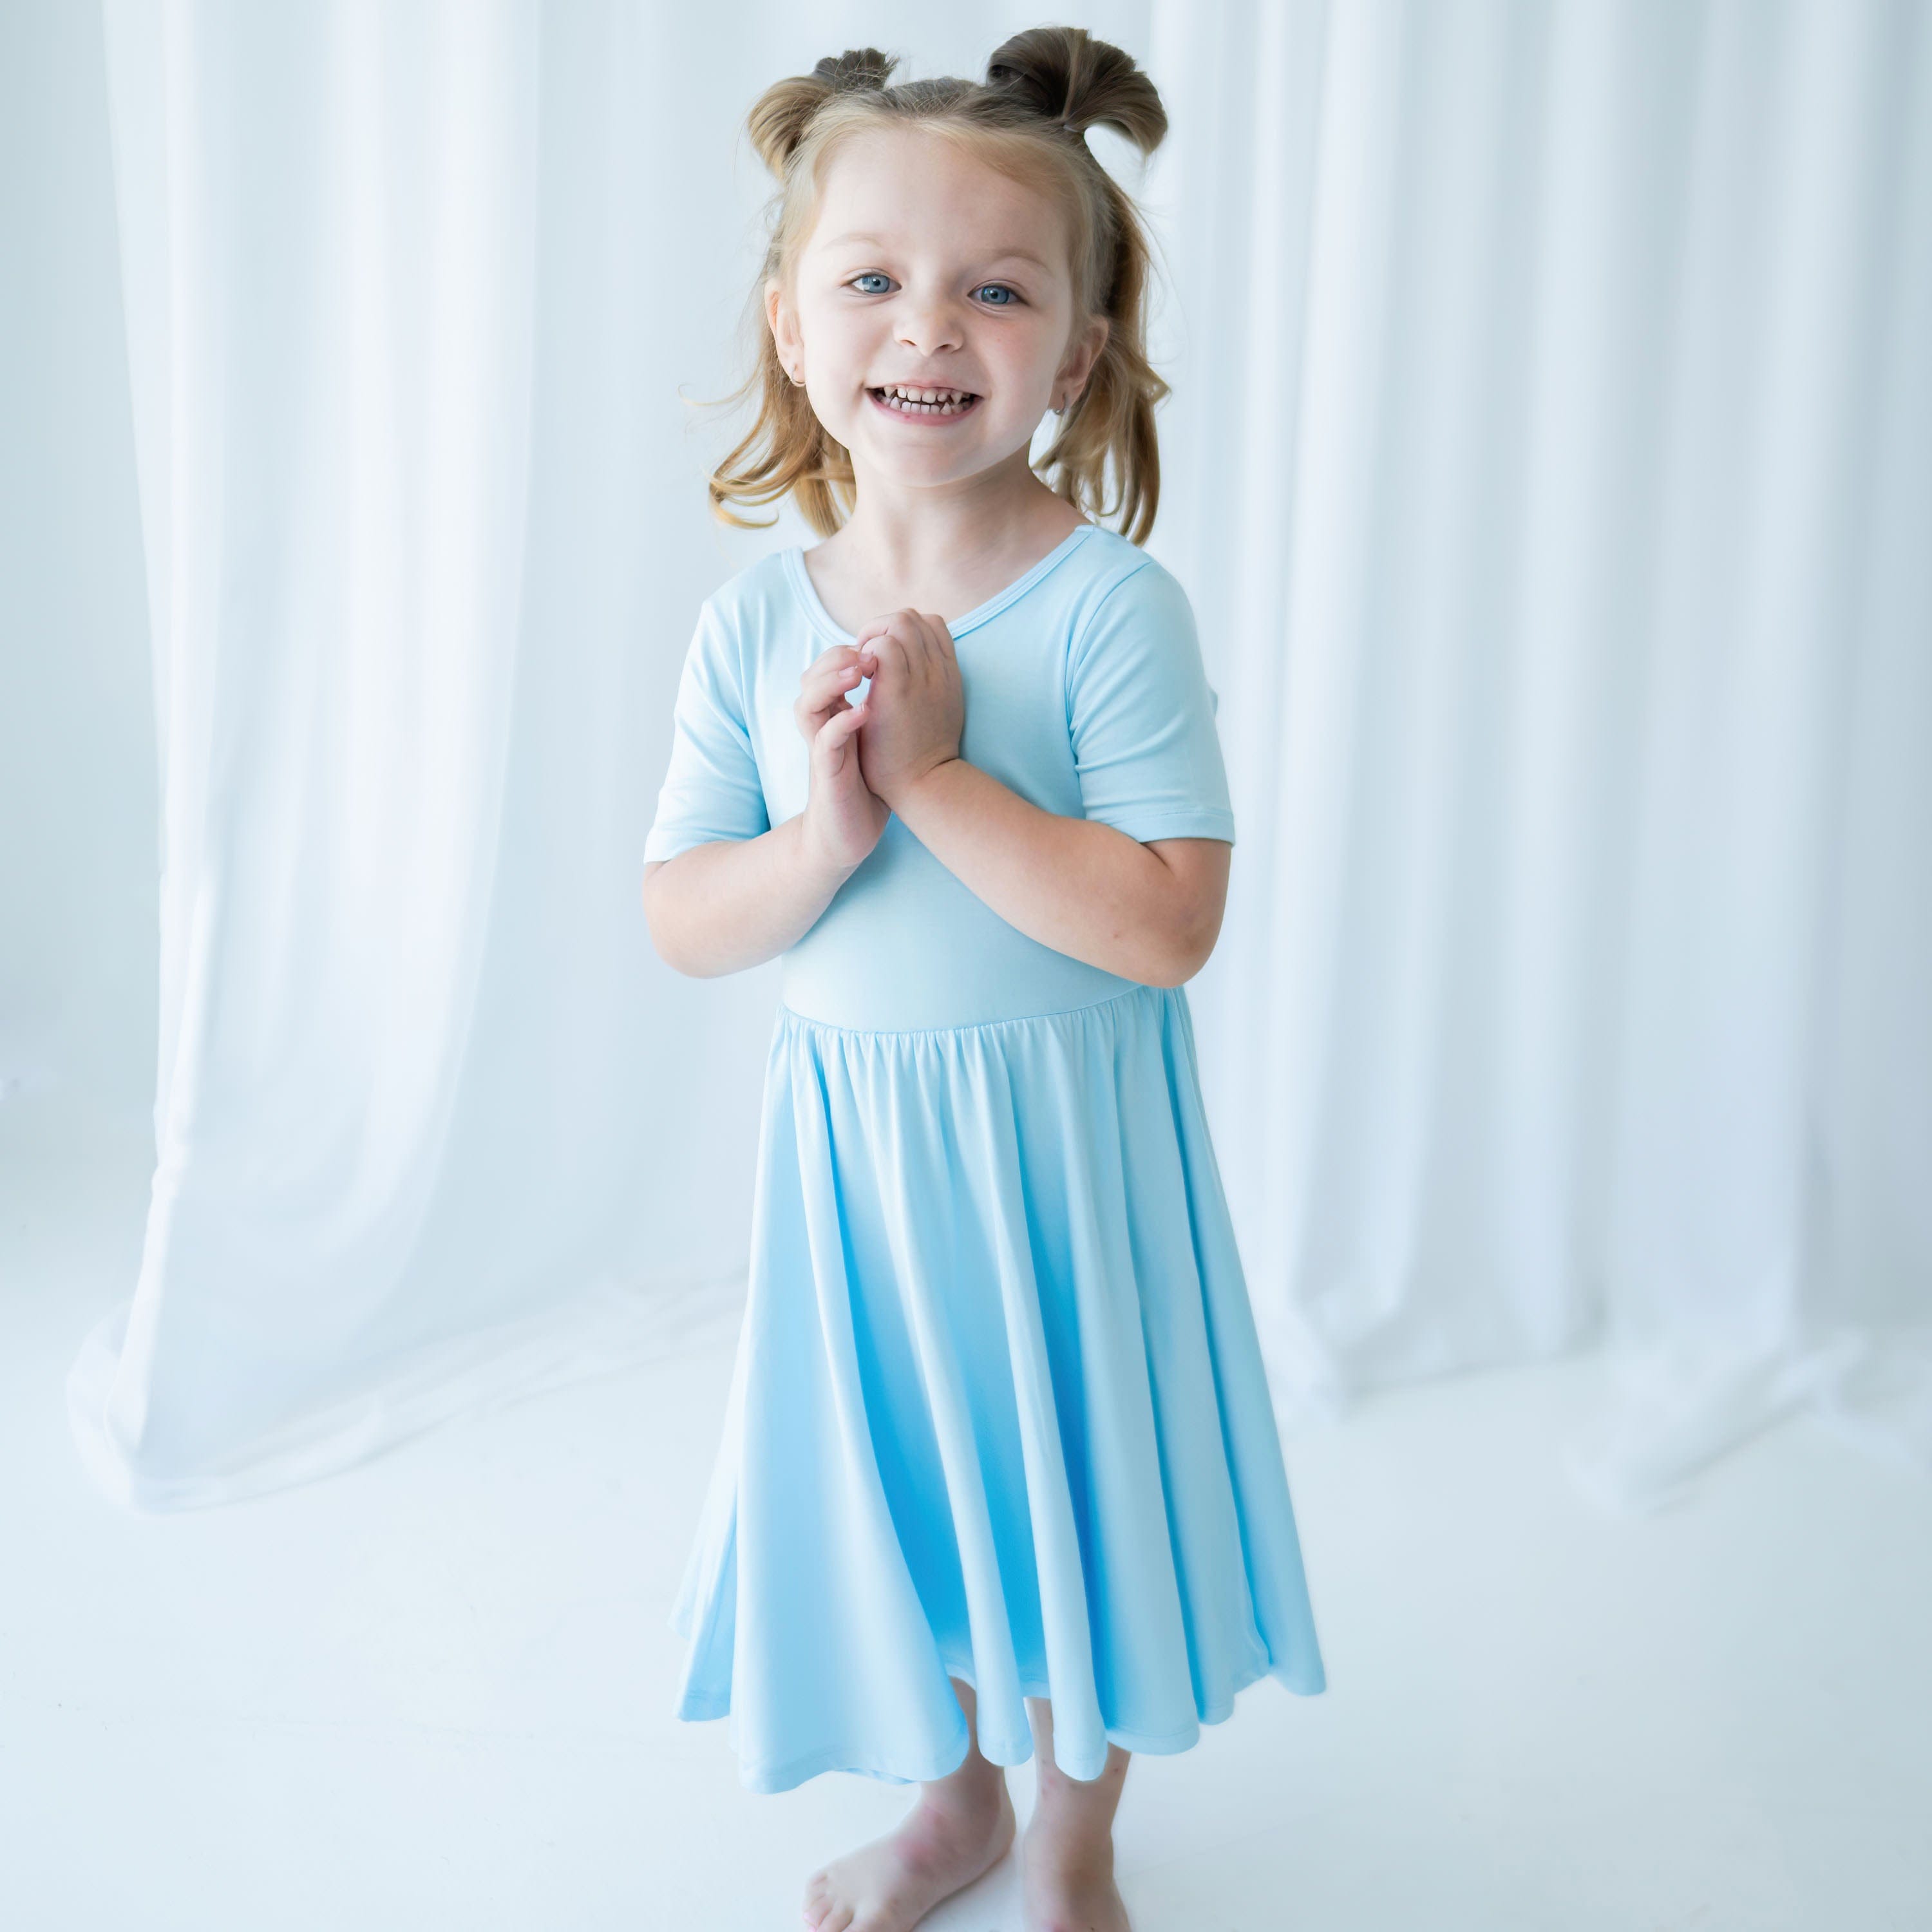 Kyte Baby Toddler Short Sleeve Twirl Dress Twirl Dress in Powder